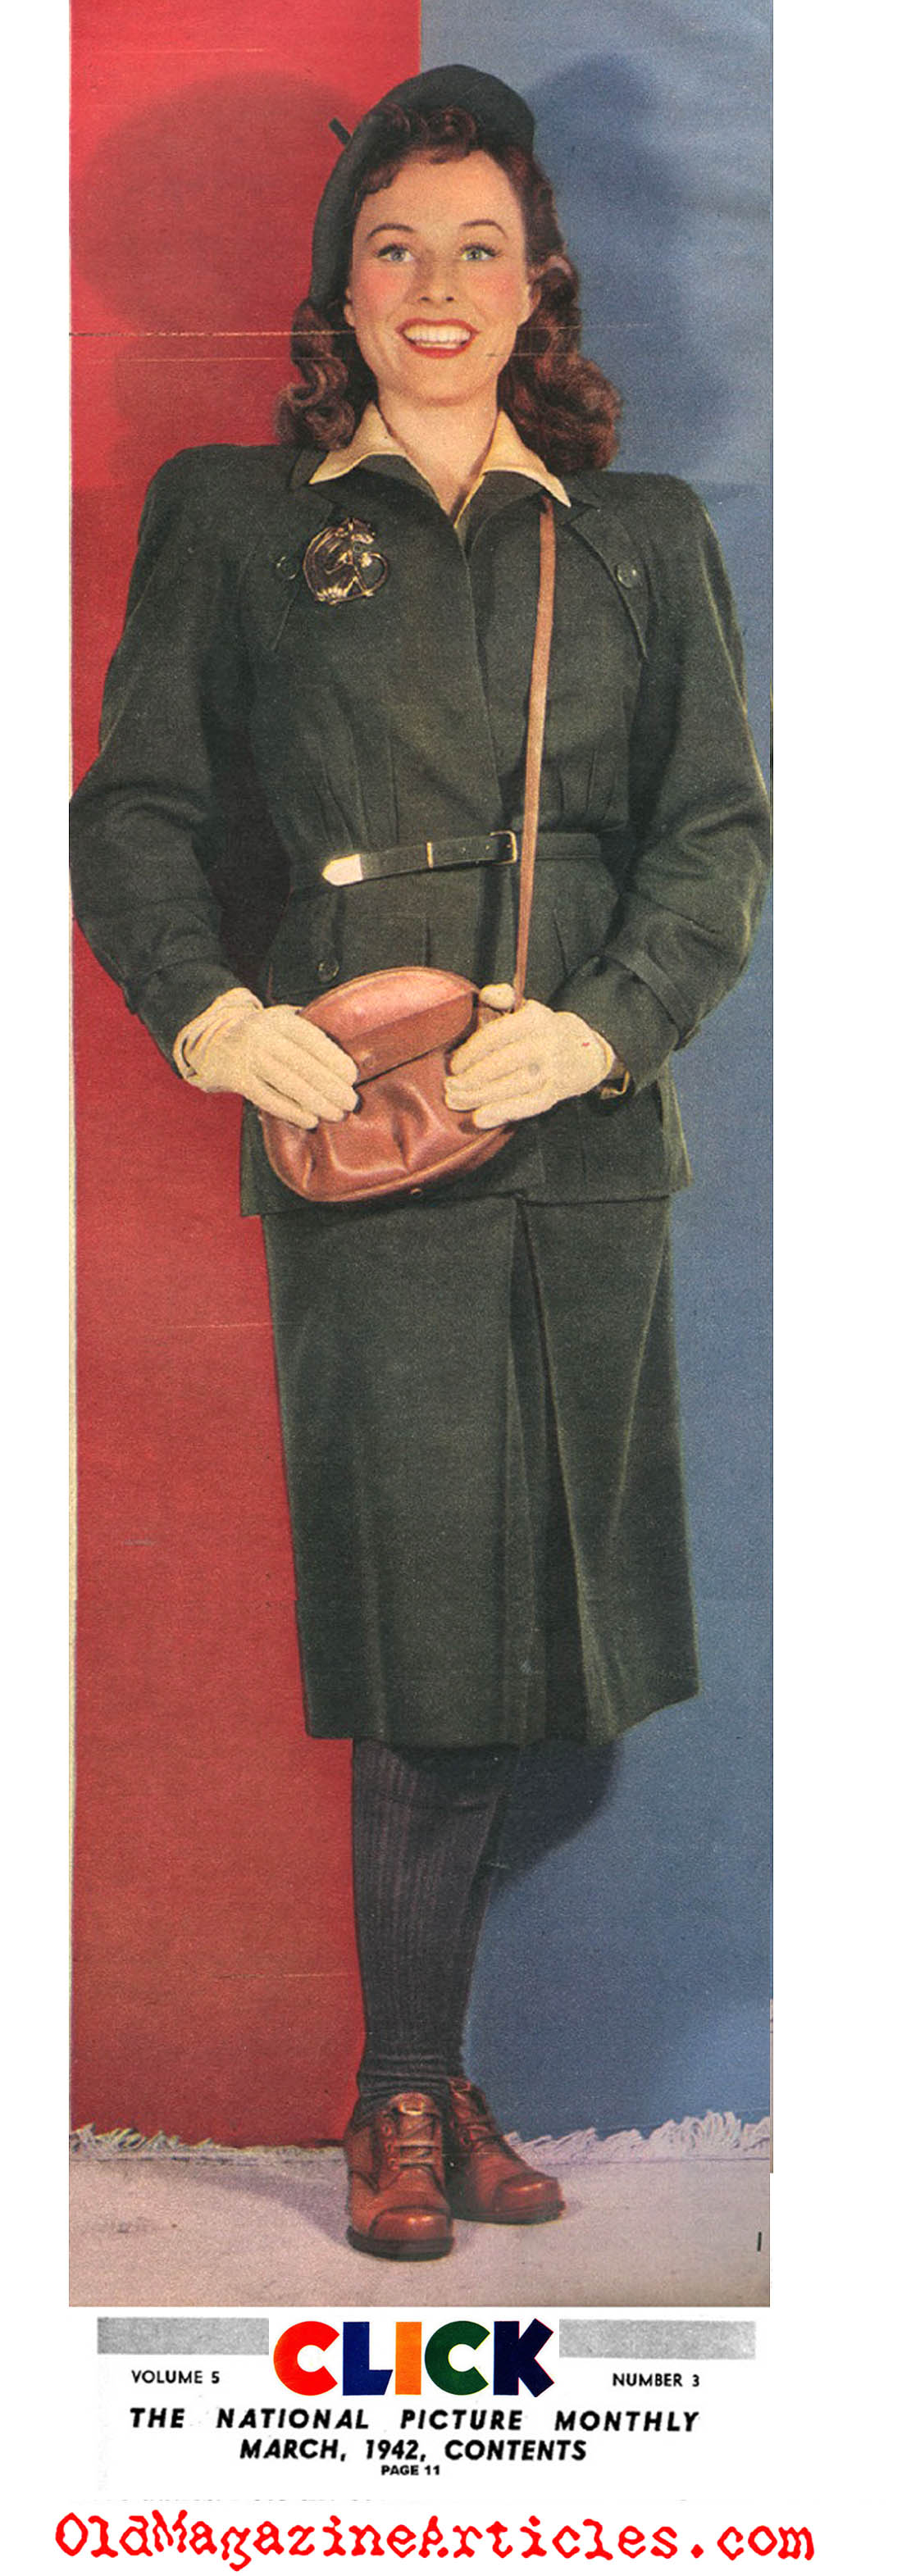 Paulette Goddard in Uniform (Click Magazine, 1942)